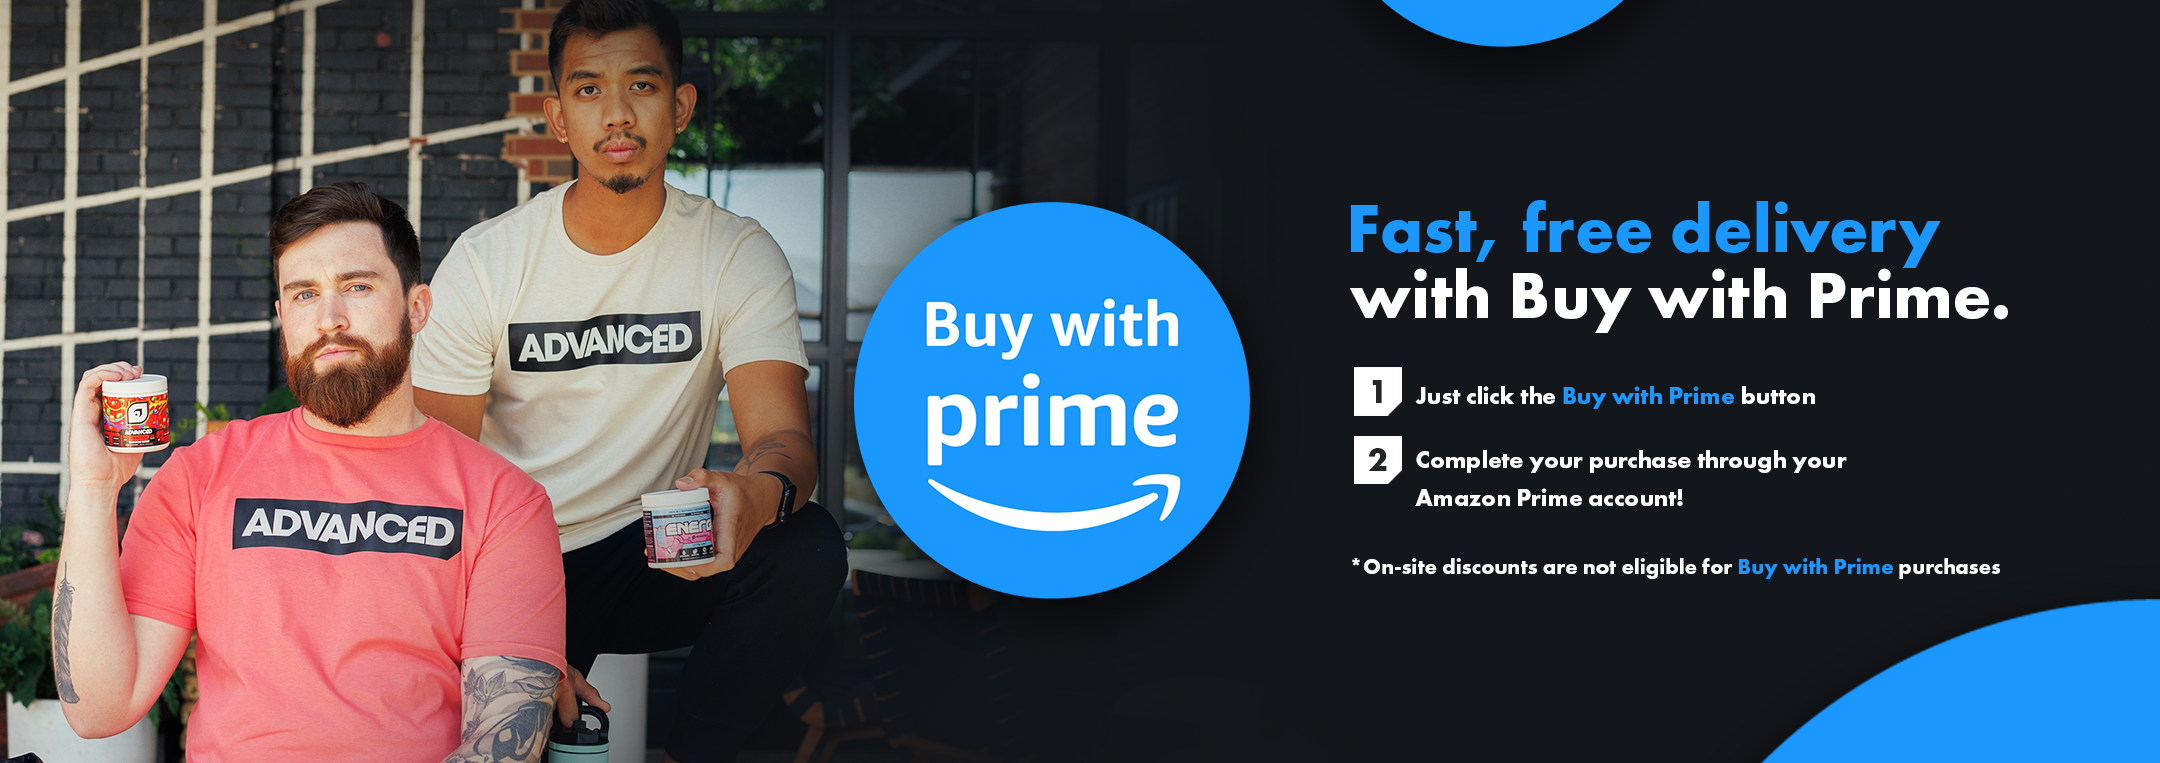 Amazon Buy with Prime